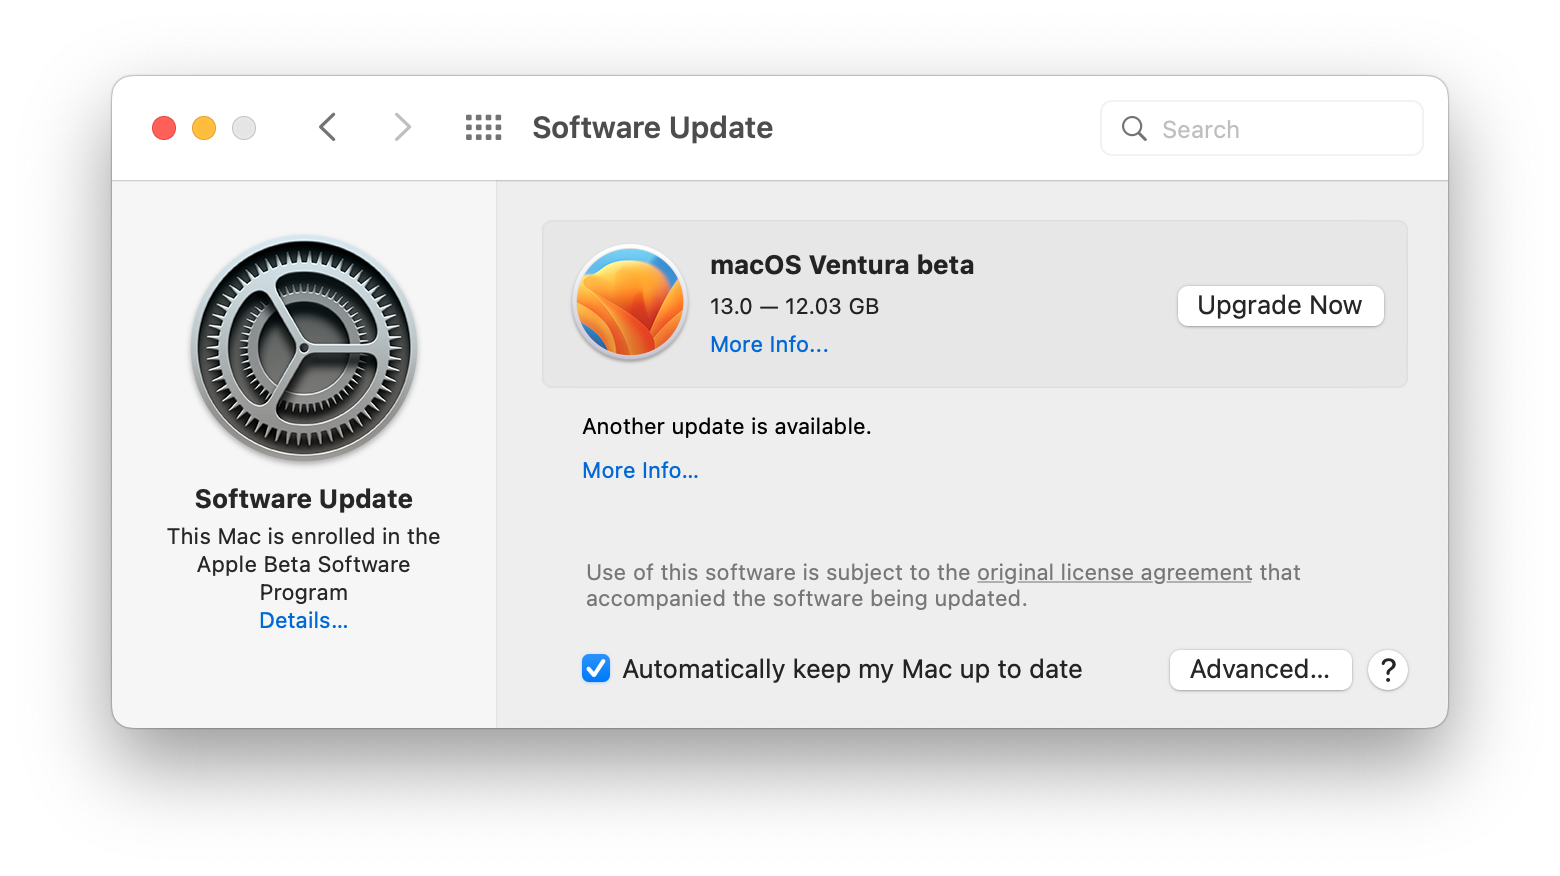 macOS Ventura beta 13.0 12.03 GB Upgrade Now